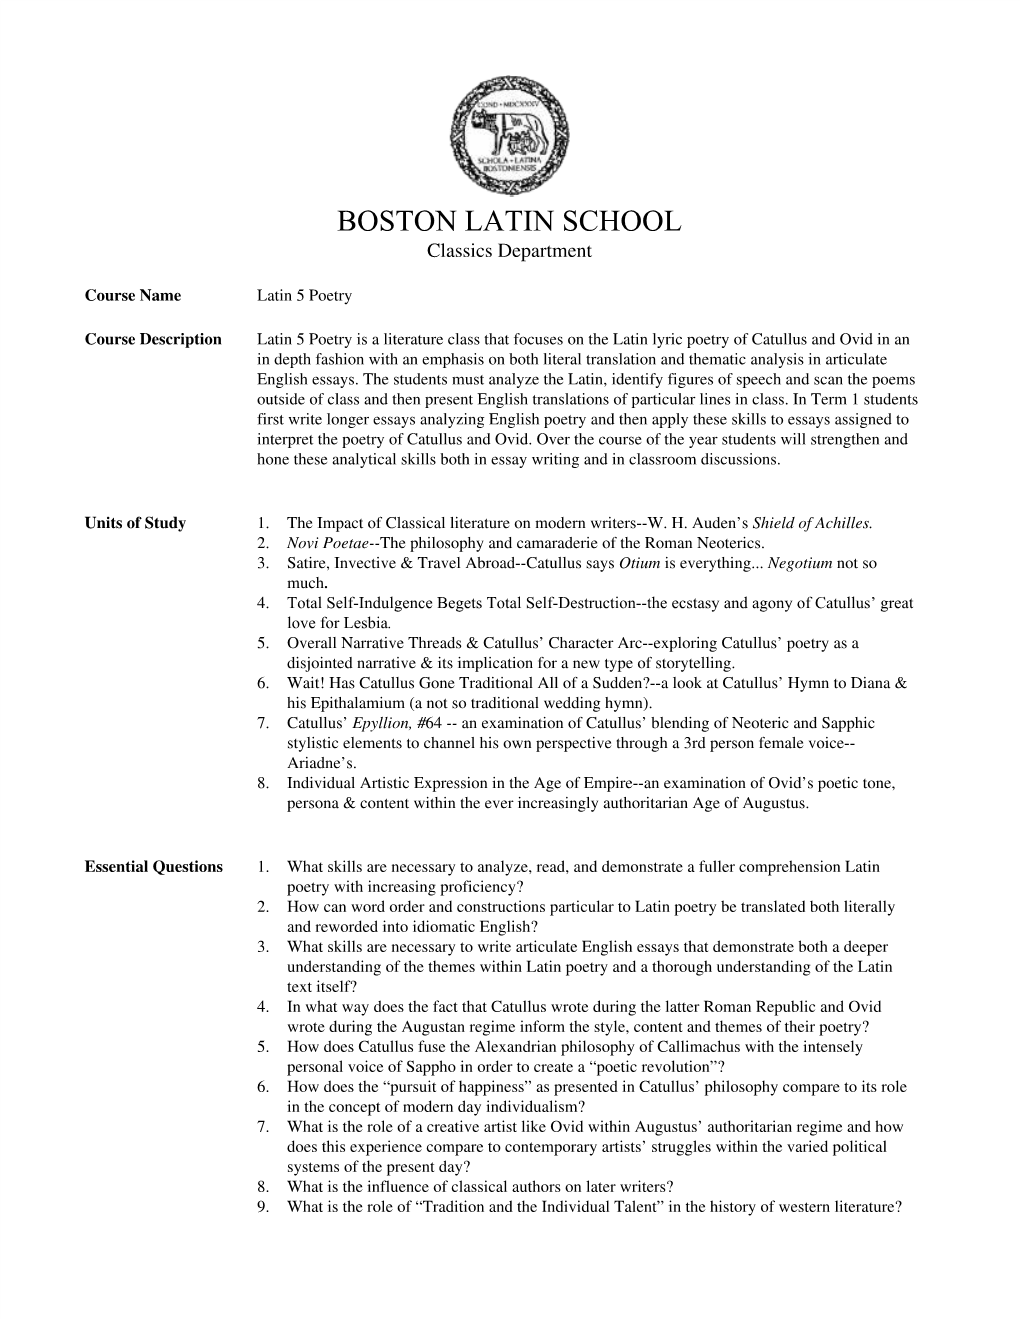 BOSTON LATIN SCHOOL Classics Department